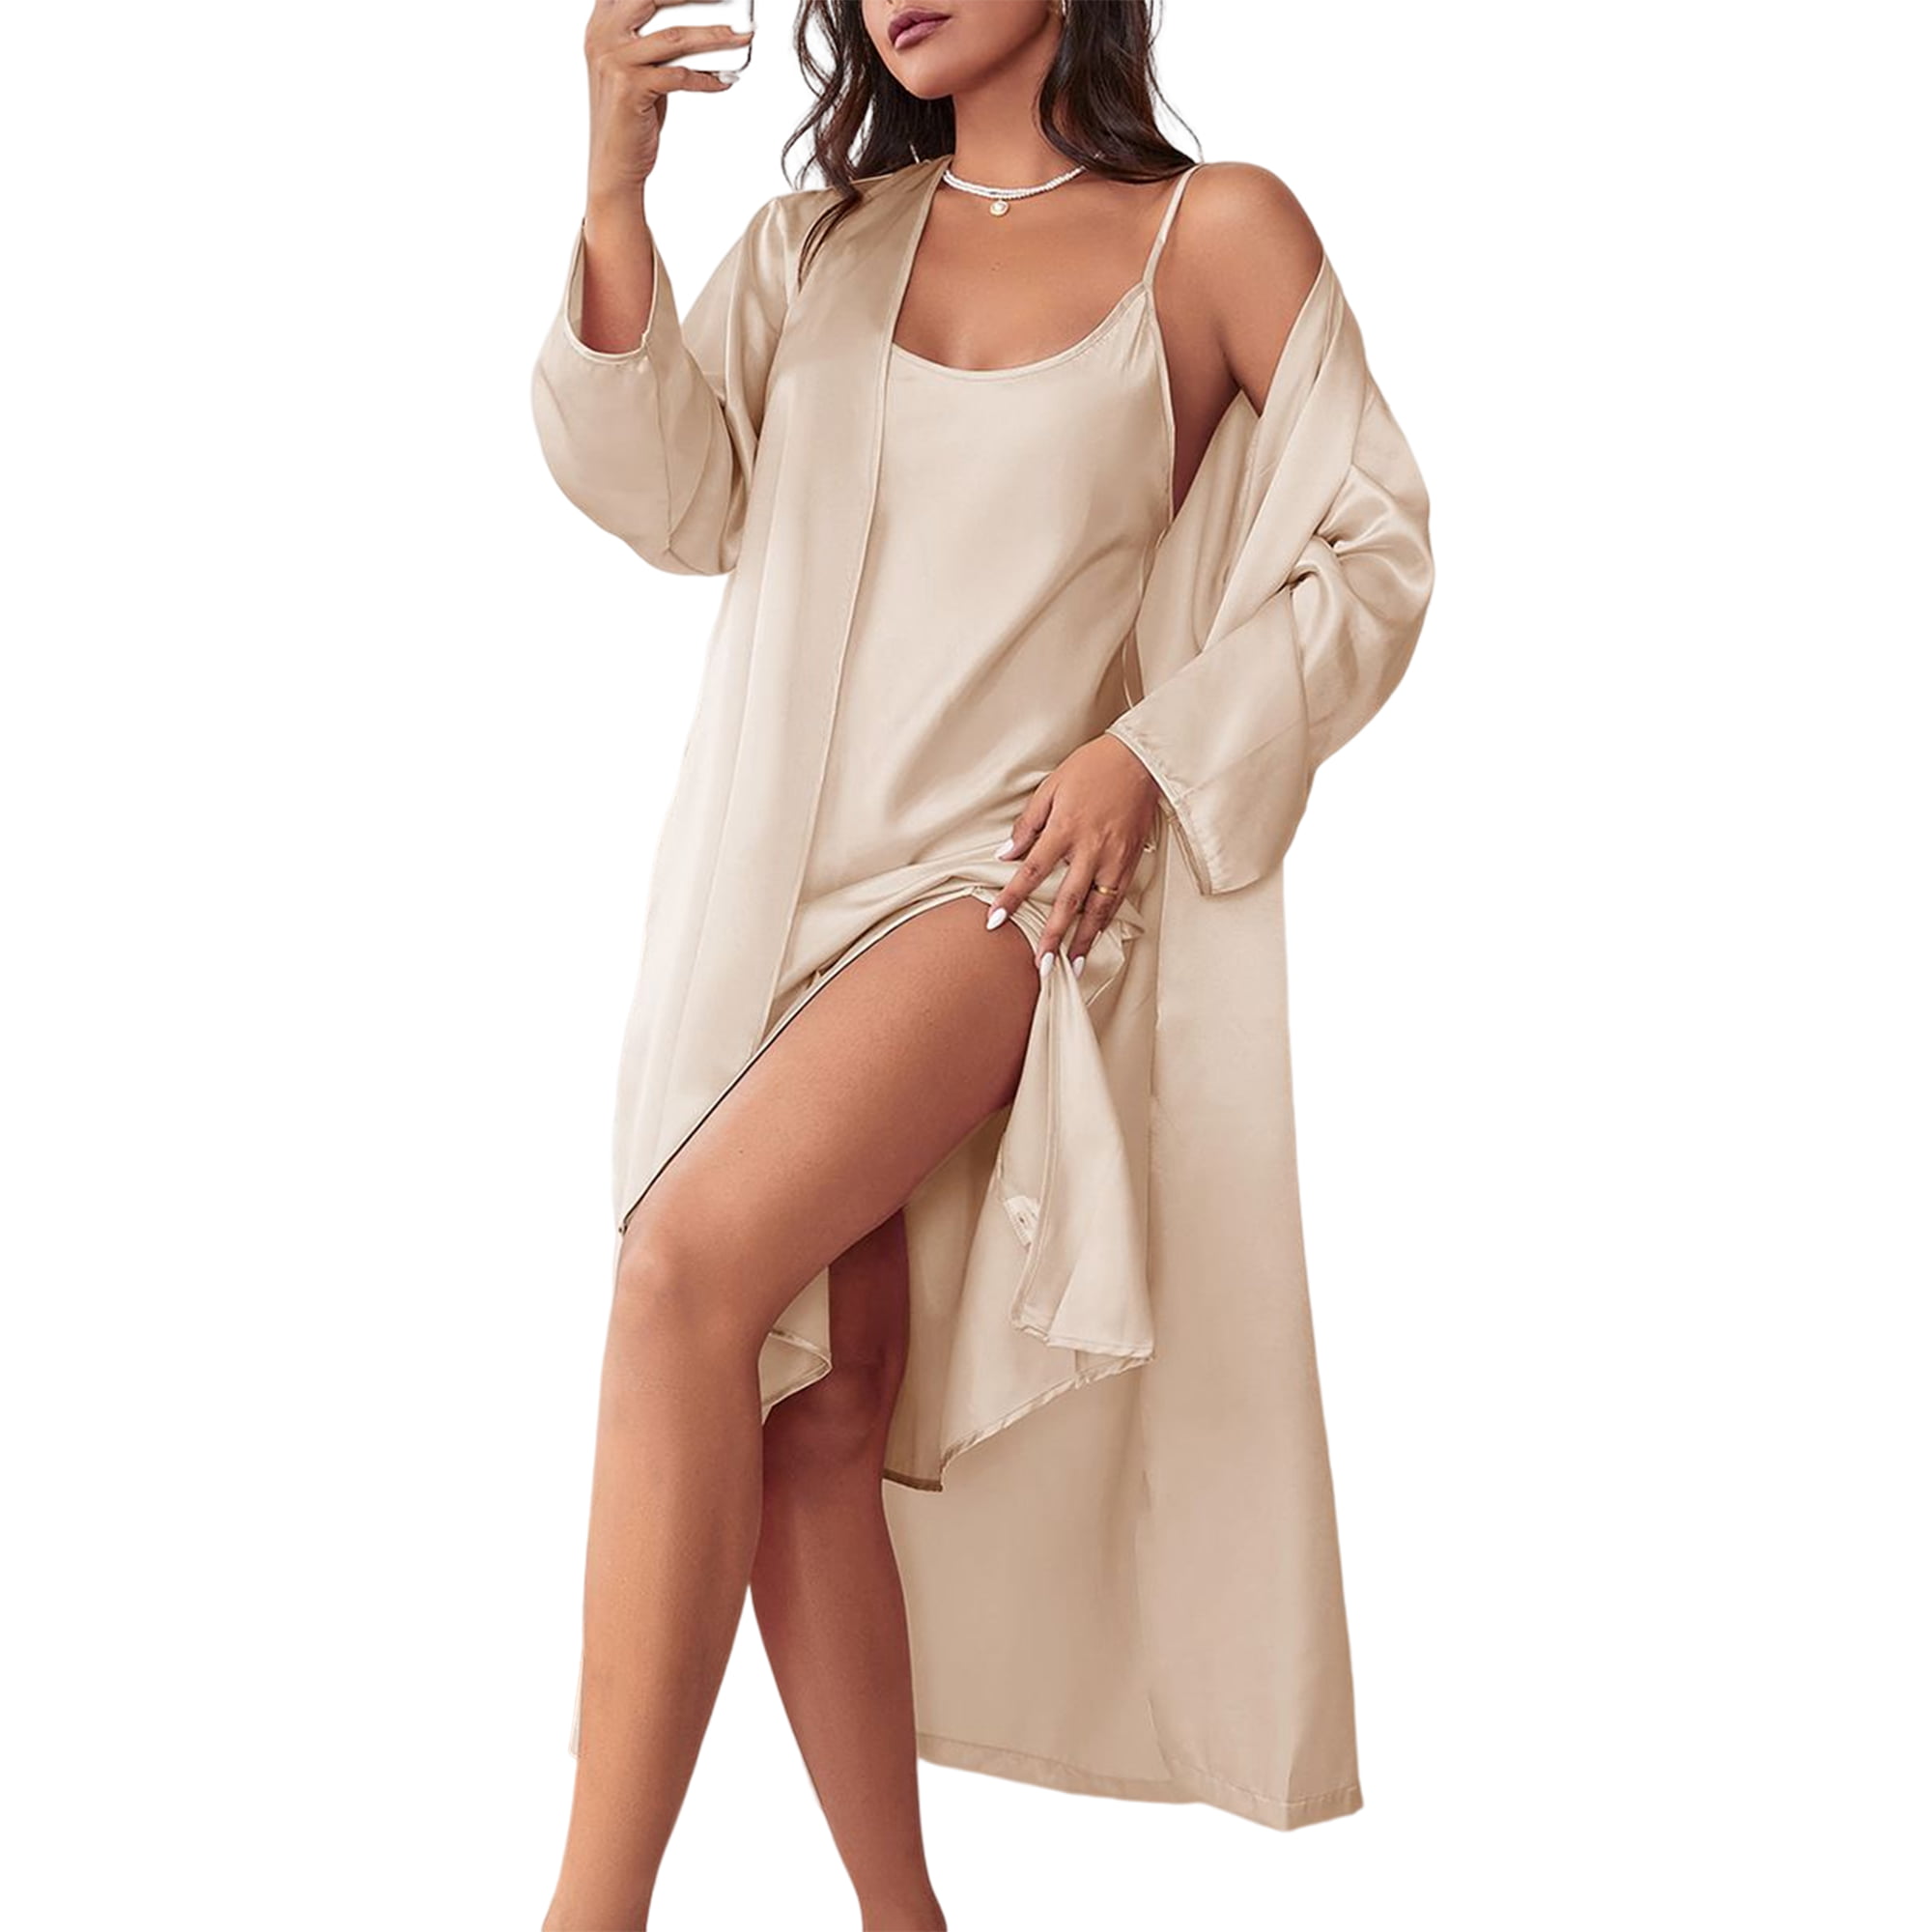 Women's Sleepwear: Pajamas, Robes & Nightdresses